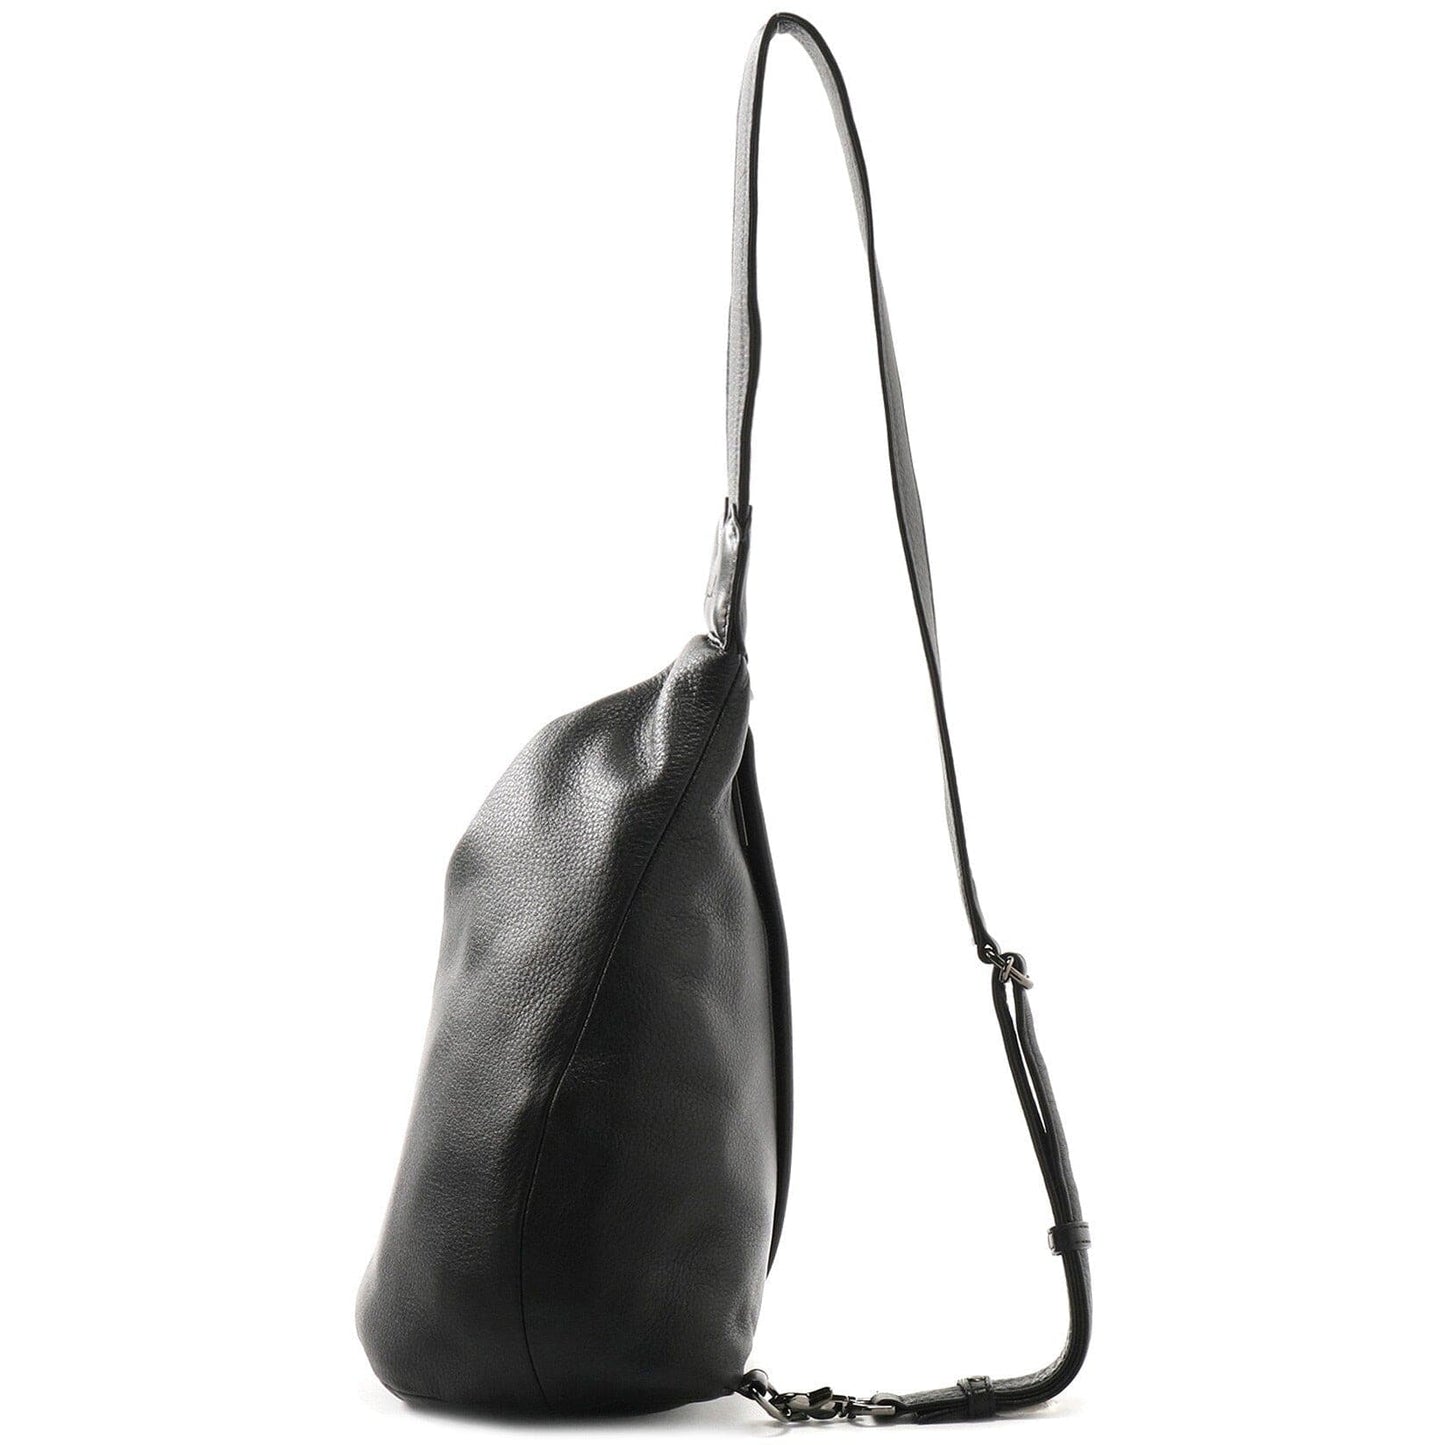 Yohji Yamamoto Handbags Black / Cow Leather / 34cm x 31cm x 15 cm Yohji Yamamoto Cross Body Bag M